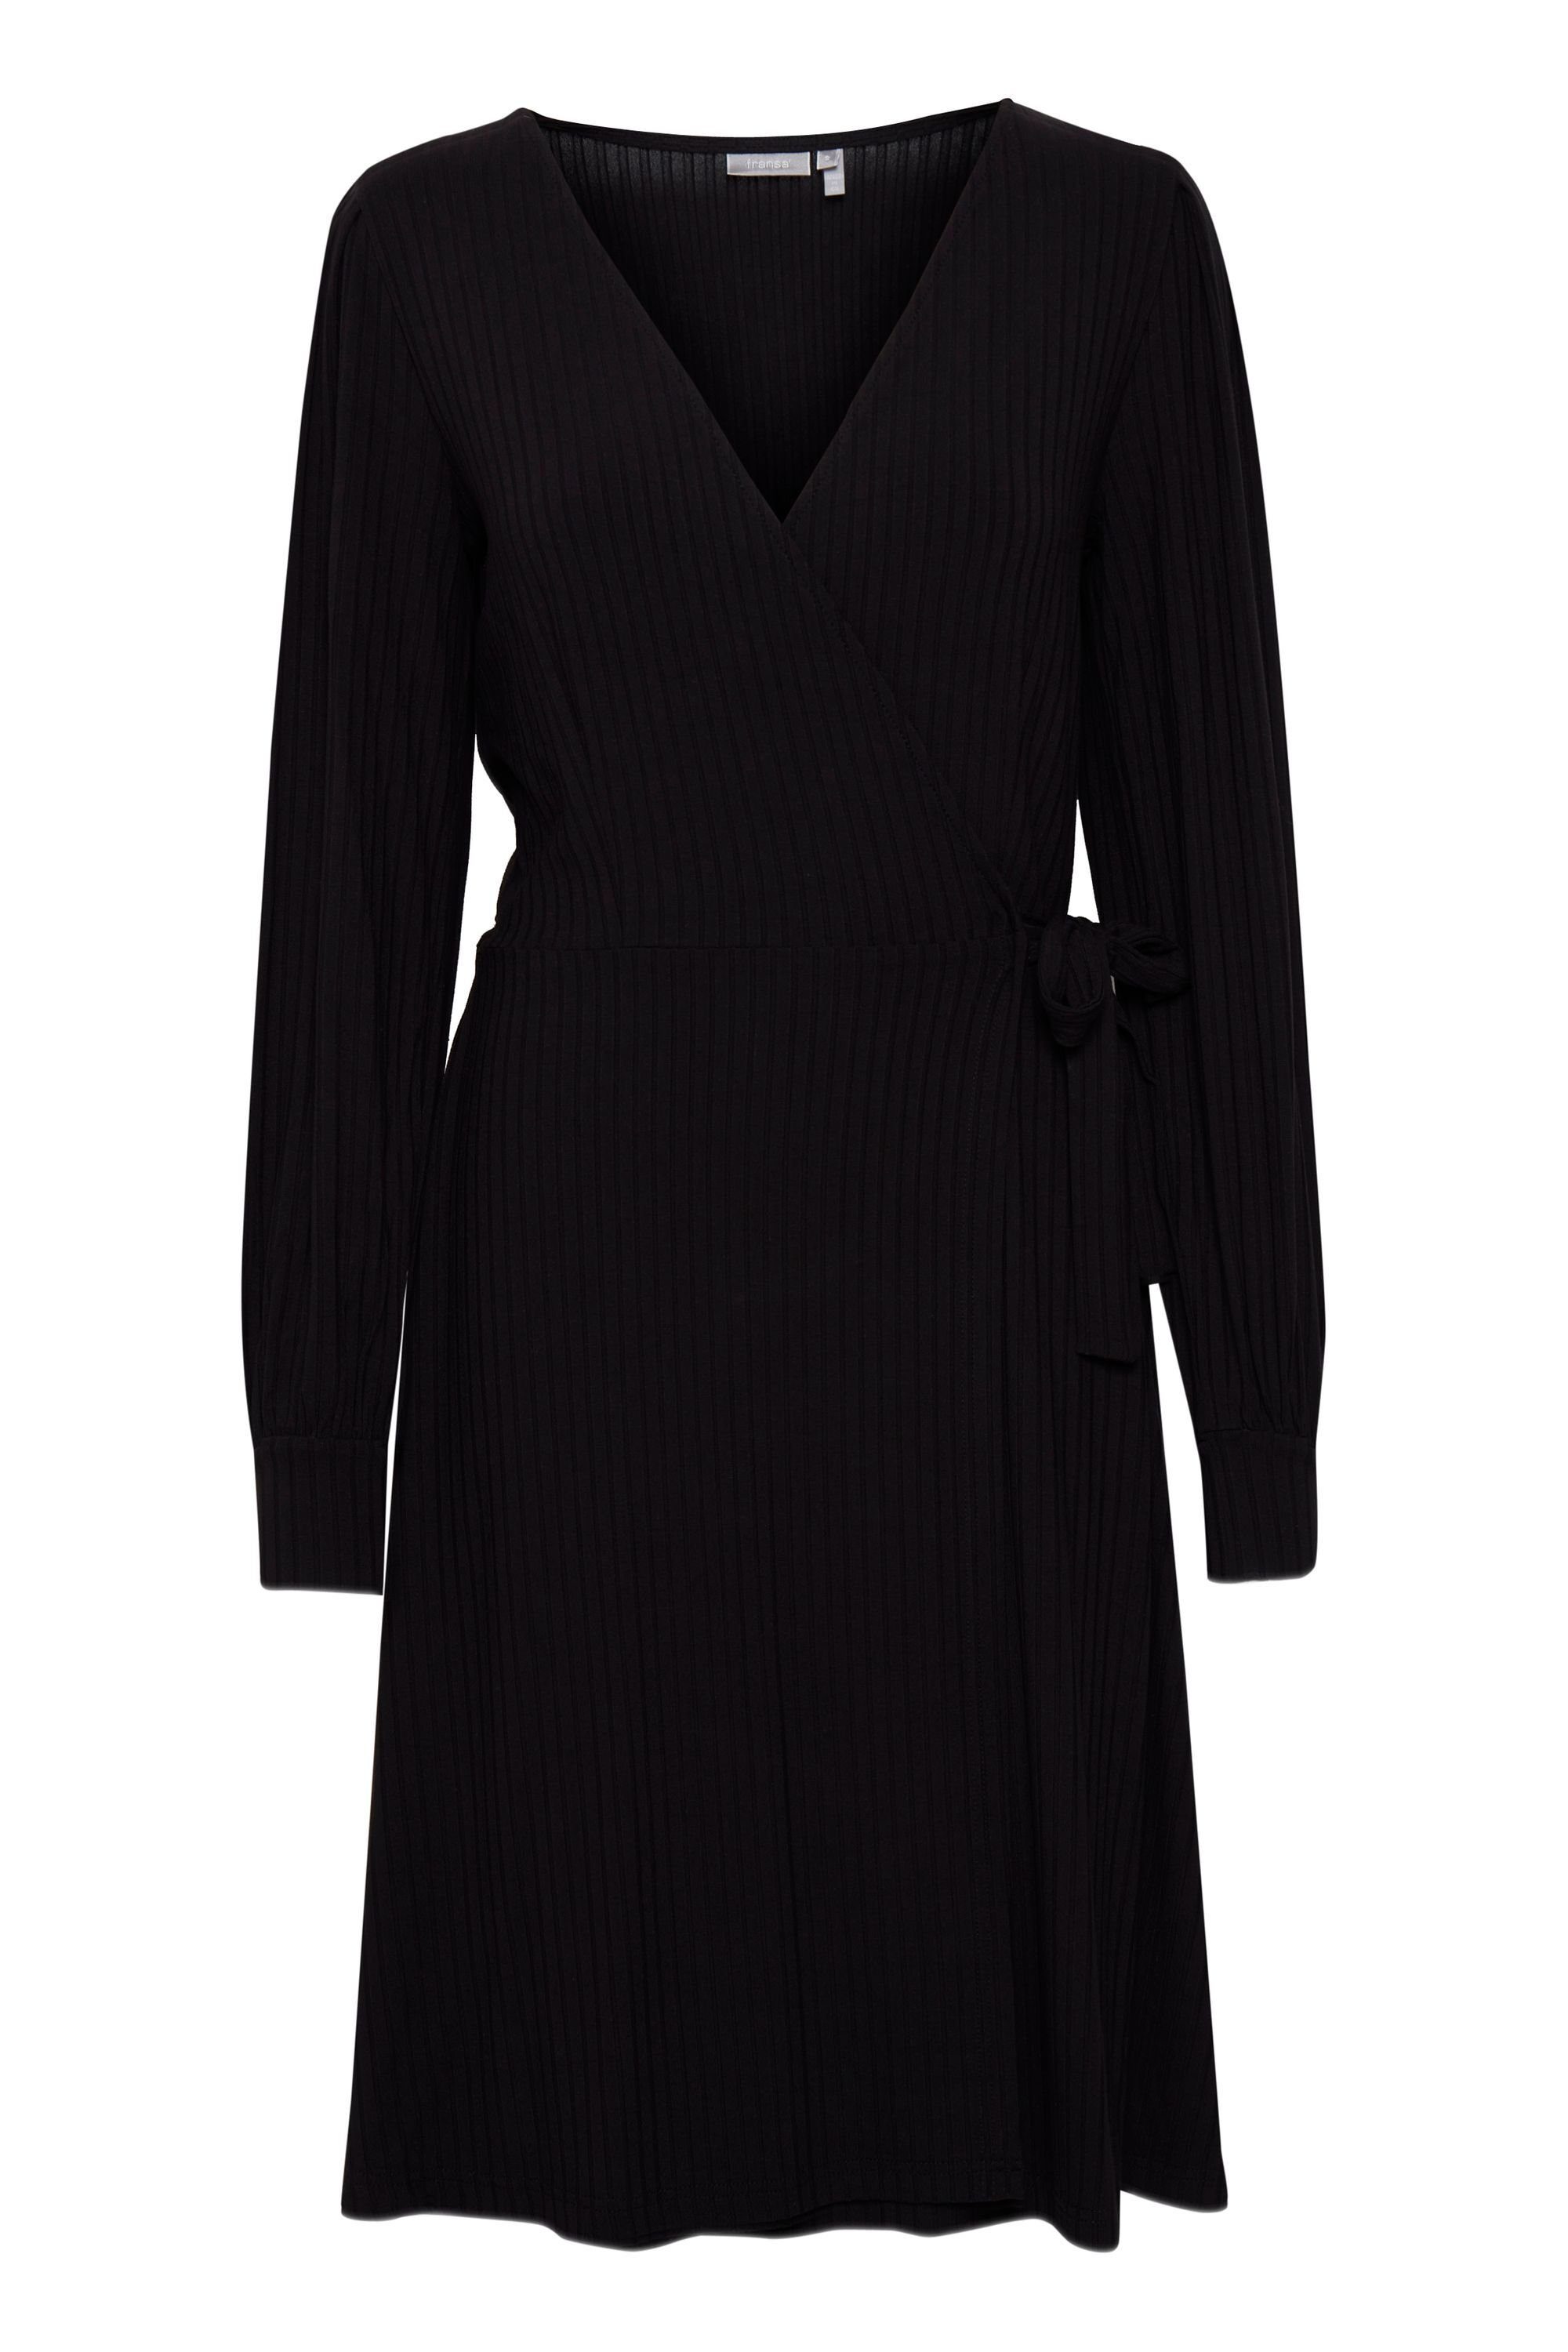 Wickelkleid FRBERIB - 2 Black Dress 20609547 fransa Fransa